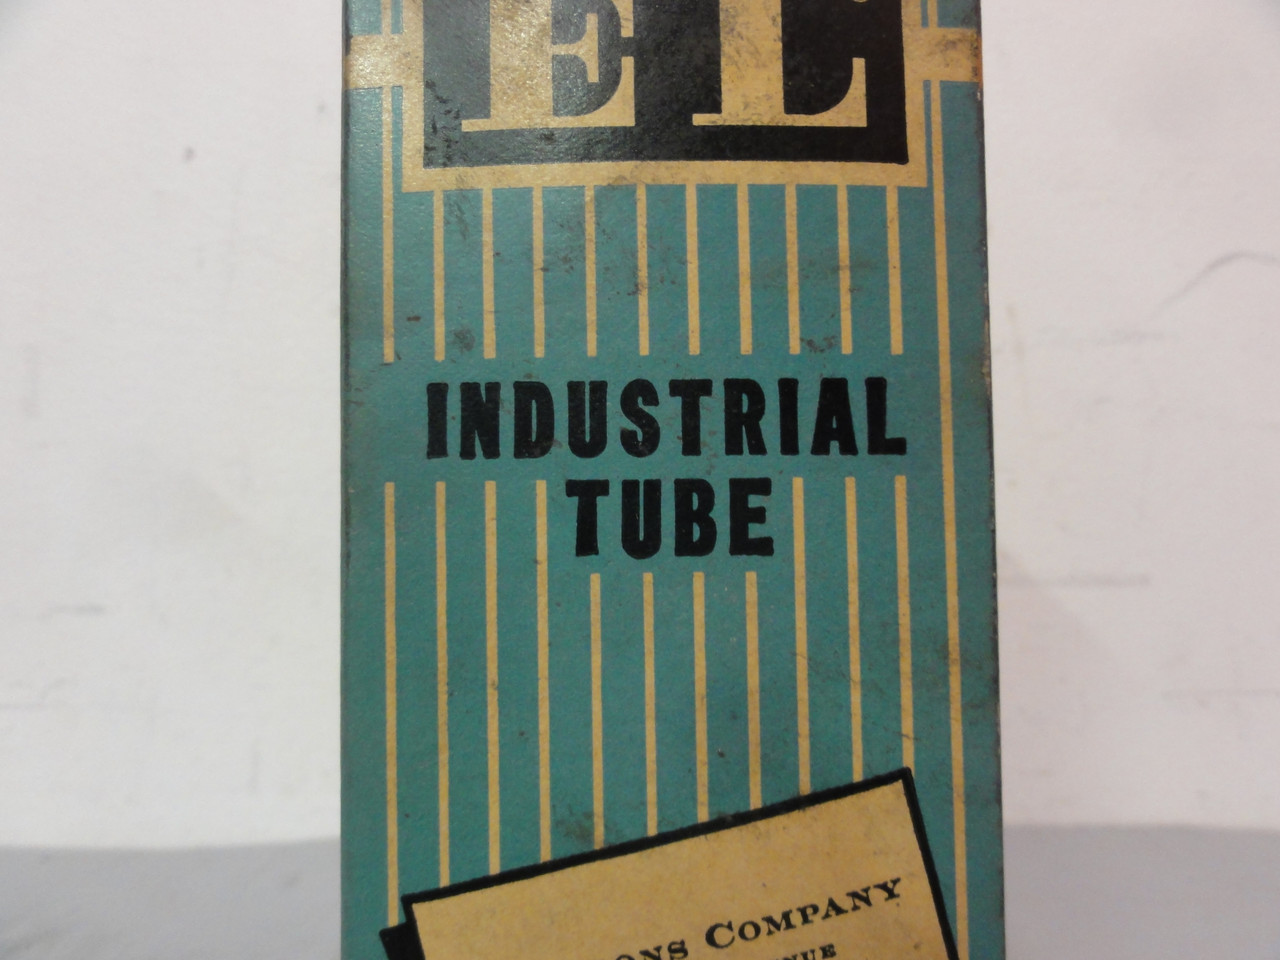 Electrons Company EL C3J/L Industrial Tube With Original Box